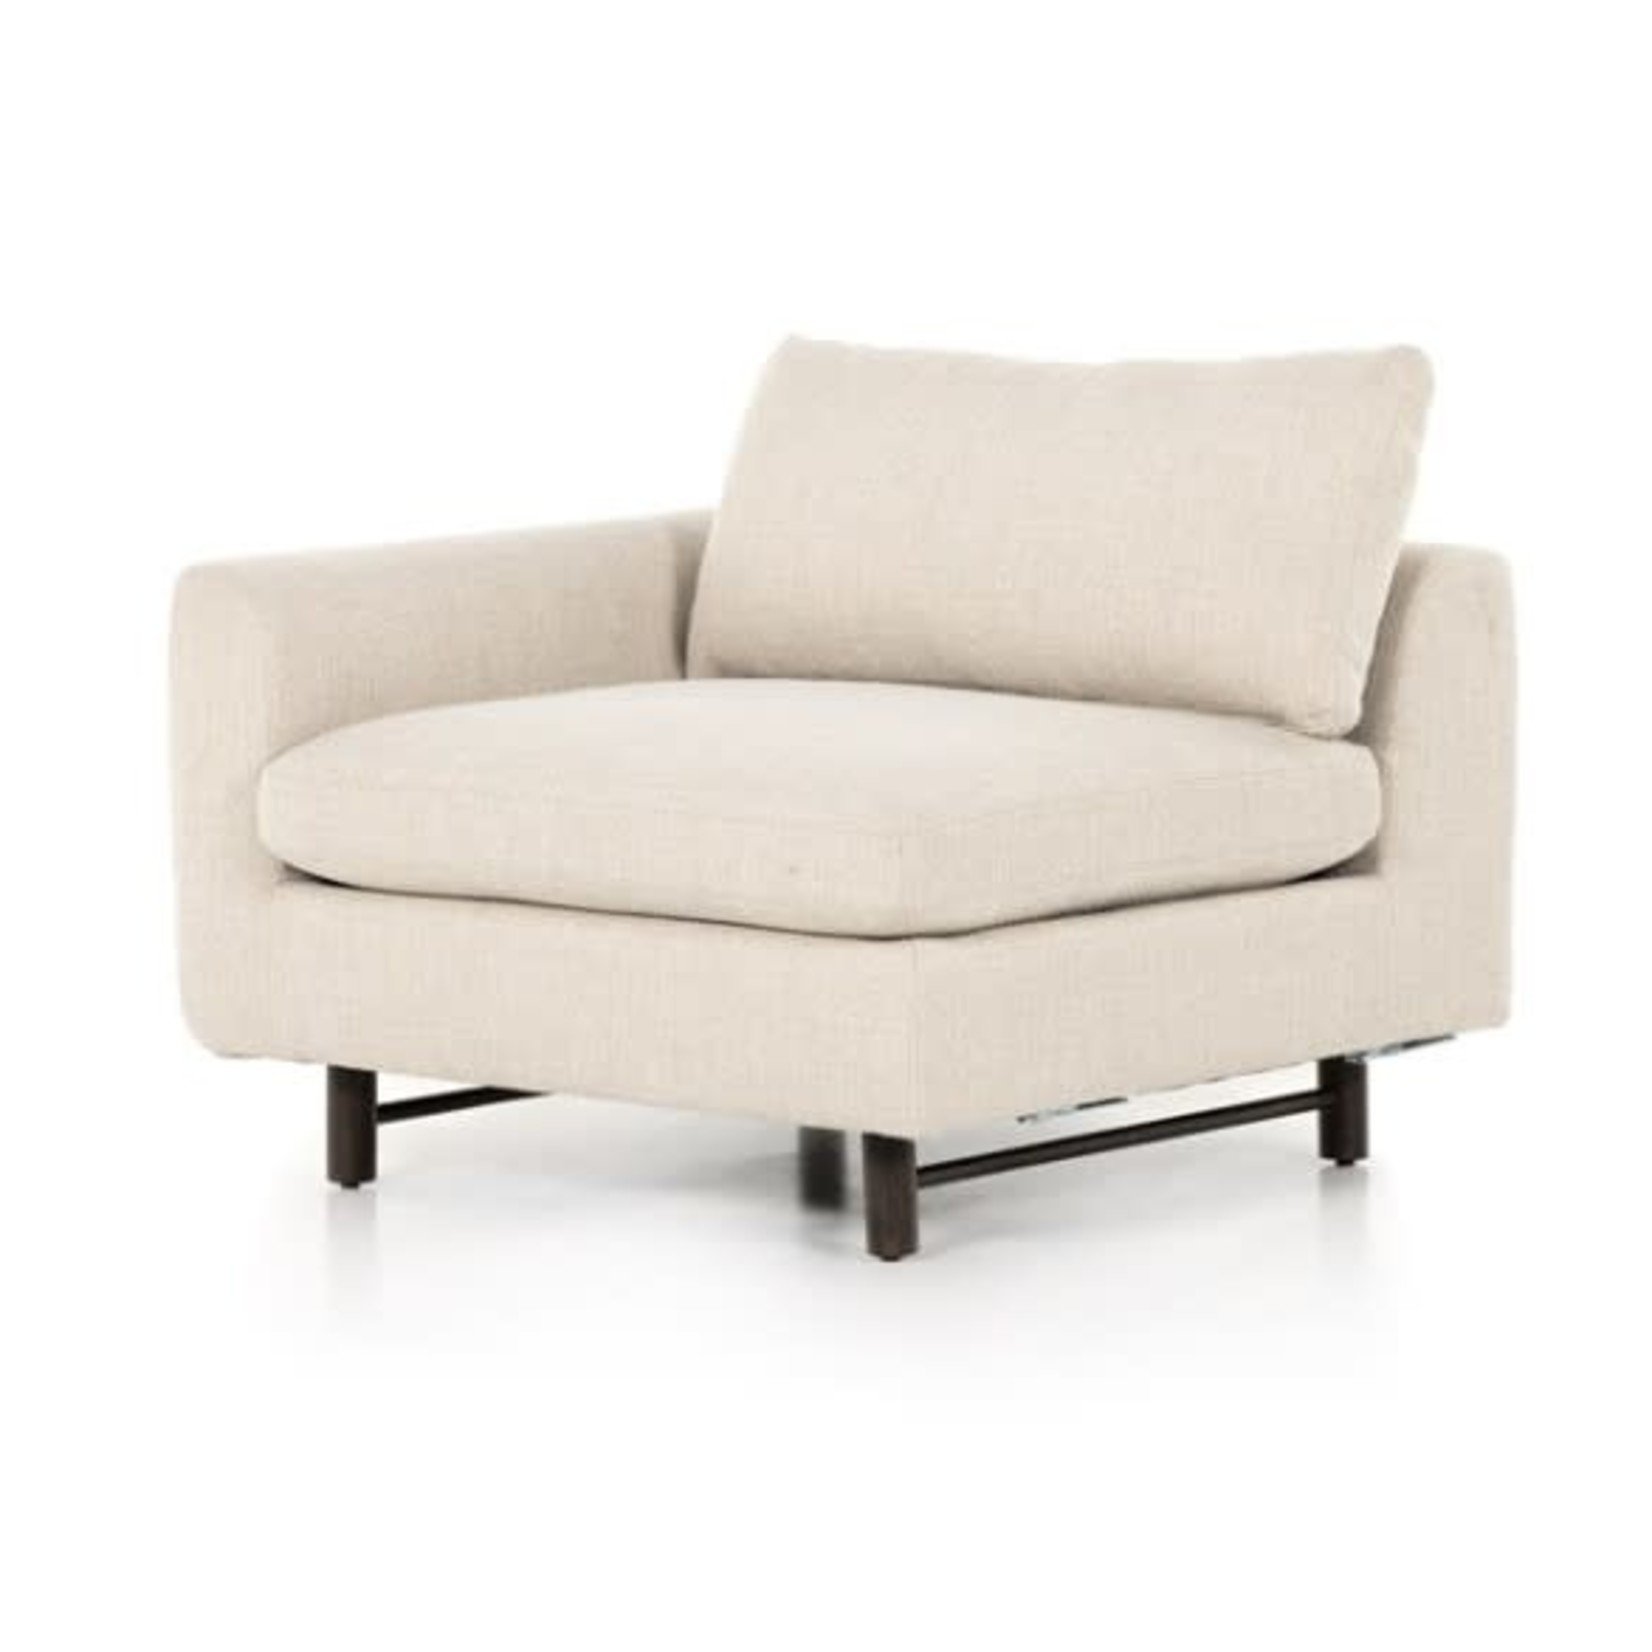 Mickler & Co. Manny Modular Sofa